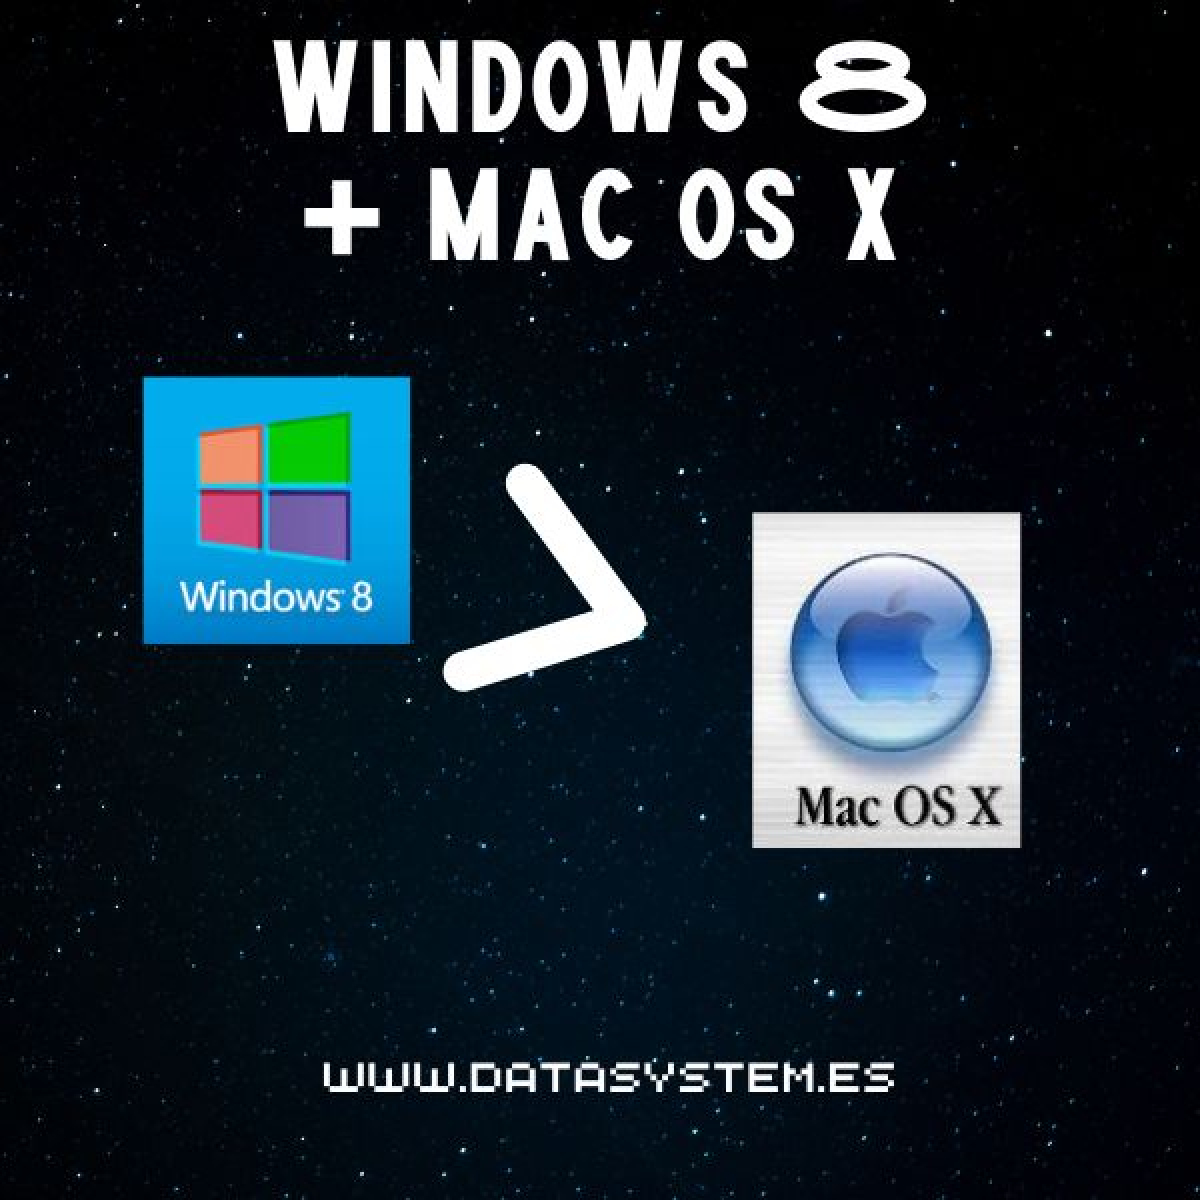 Windows 8 finalmente logra superar a Mac OS X